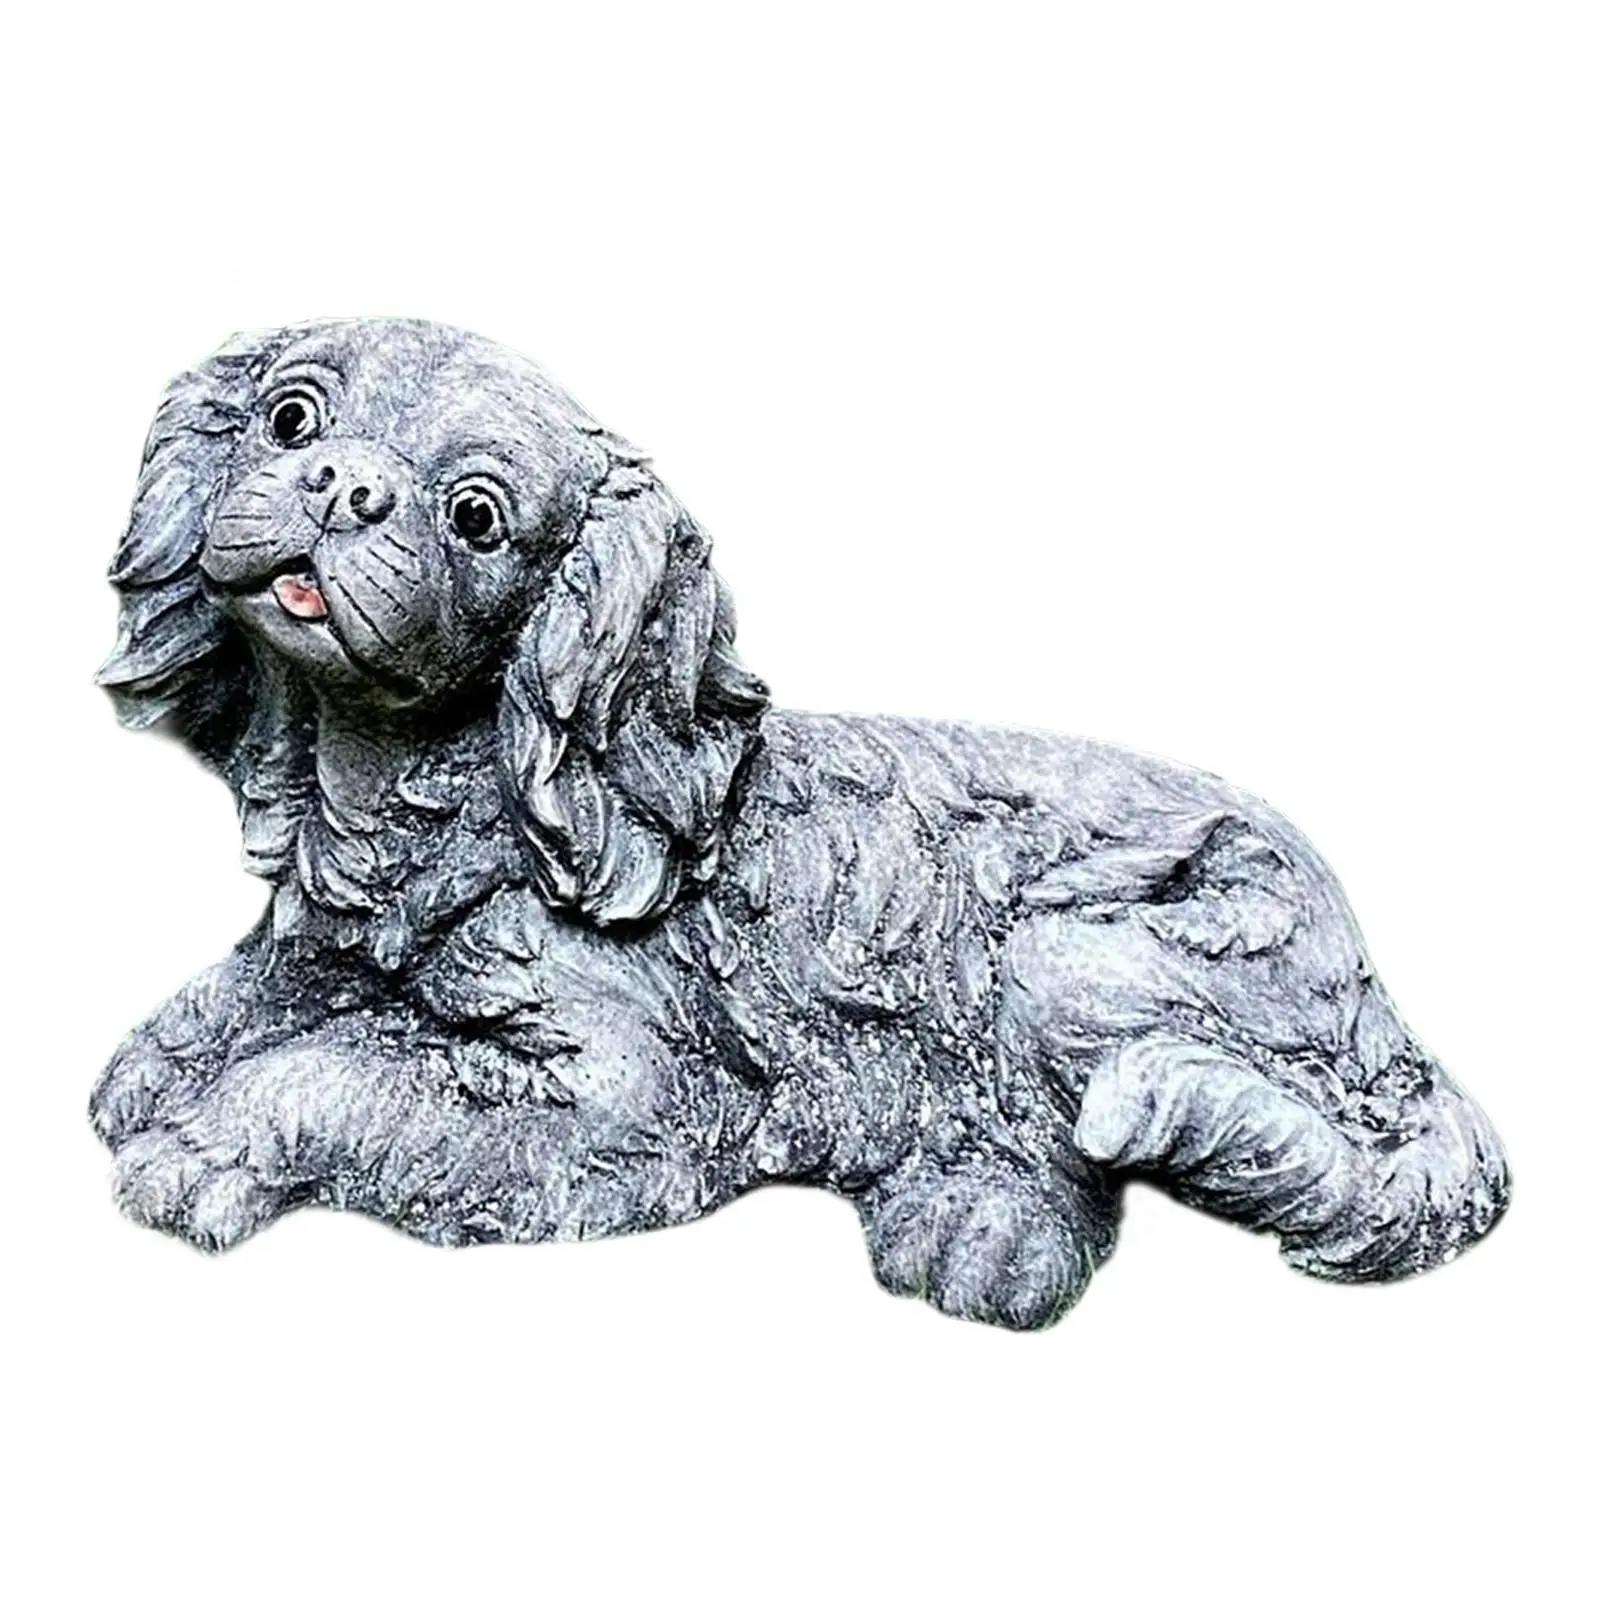 Puppy Dog, Figurine Sculpture Garden Statues Decorative for Patio Pet Memorial Gifts